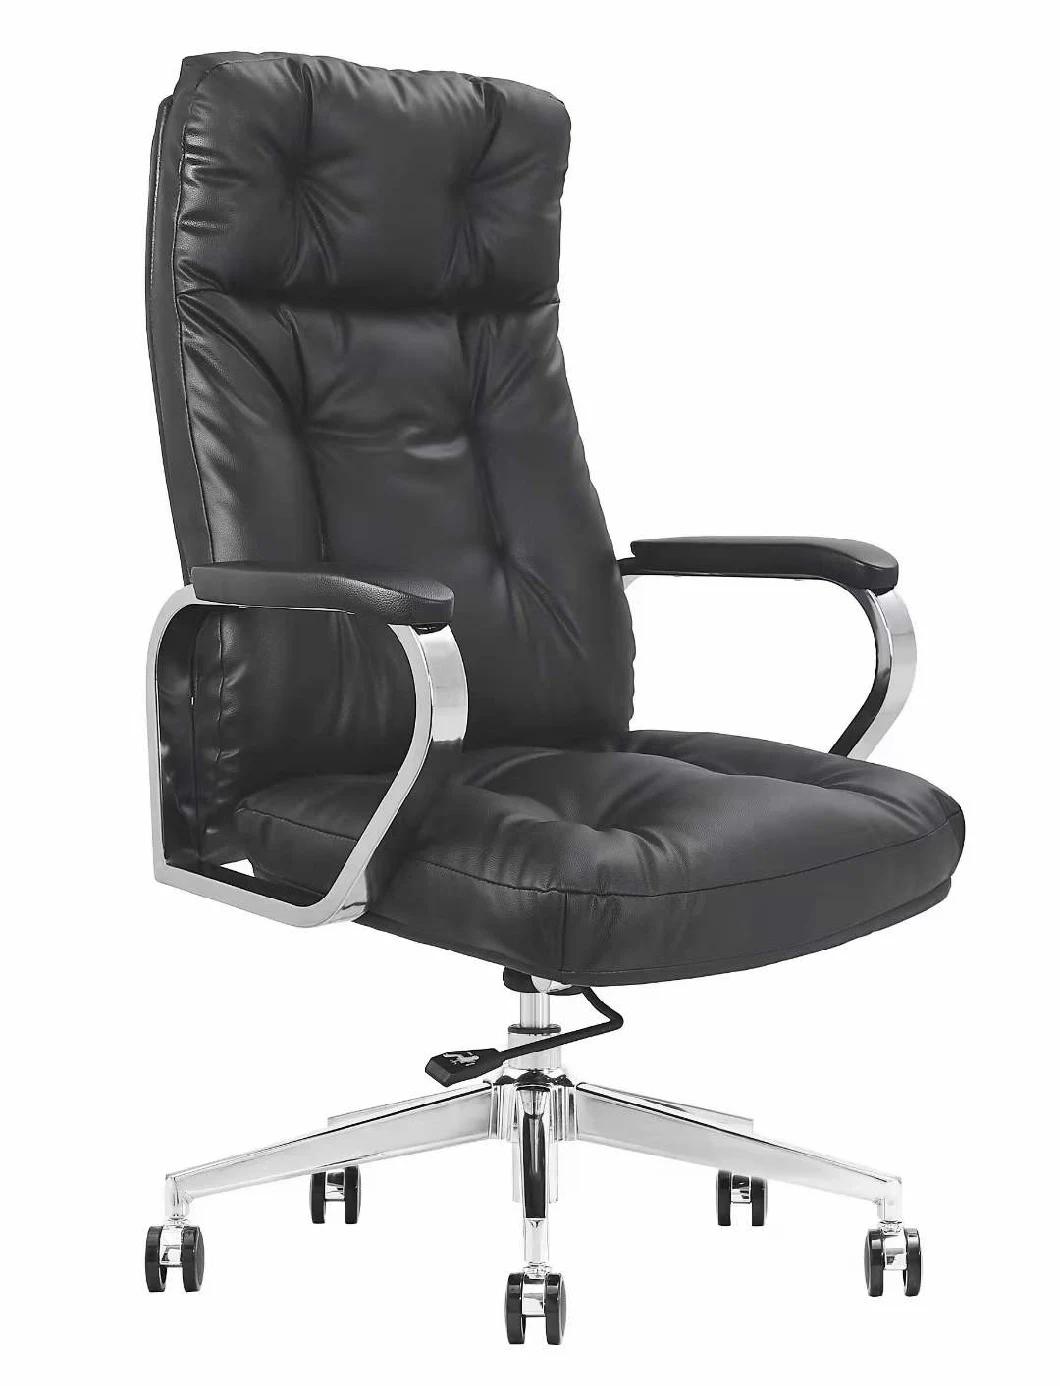 Beauty High Back Swivel Office Ergonomic Boss Executive Leather Chair